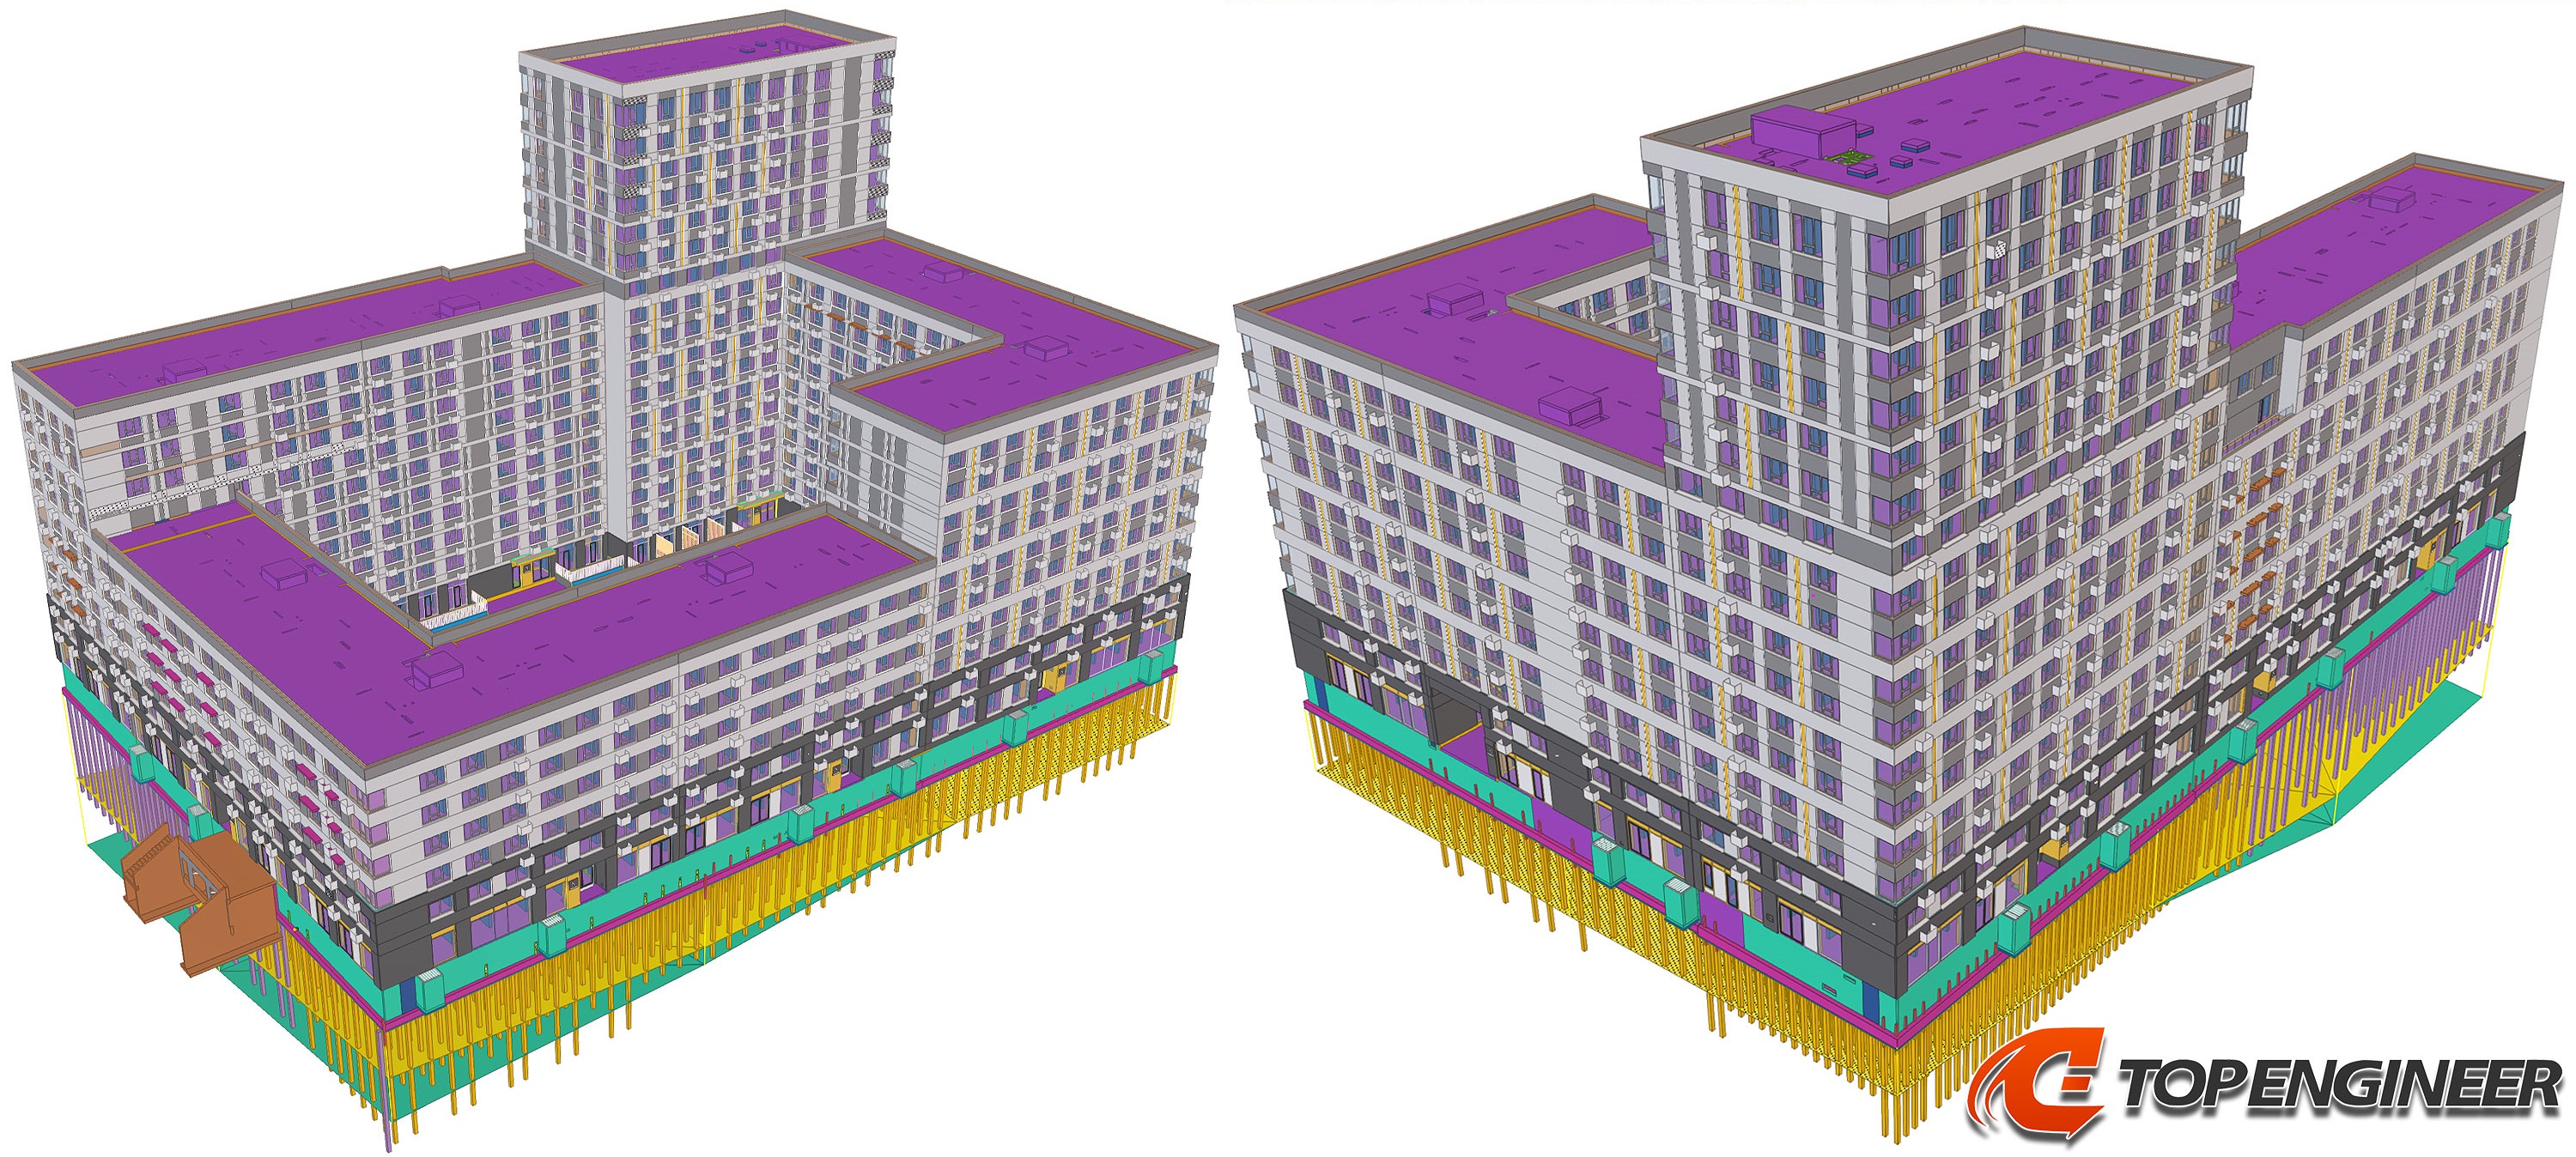 Bim building information model for residential complex in Tekla Structures